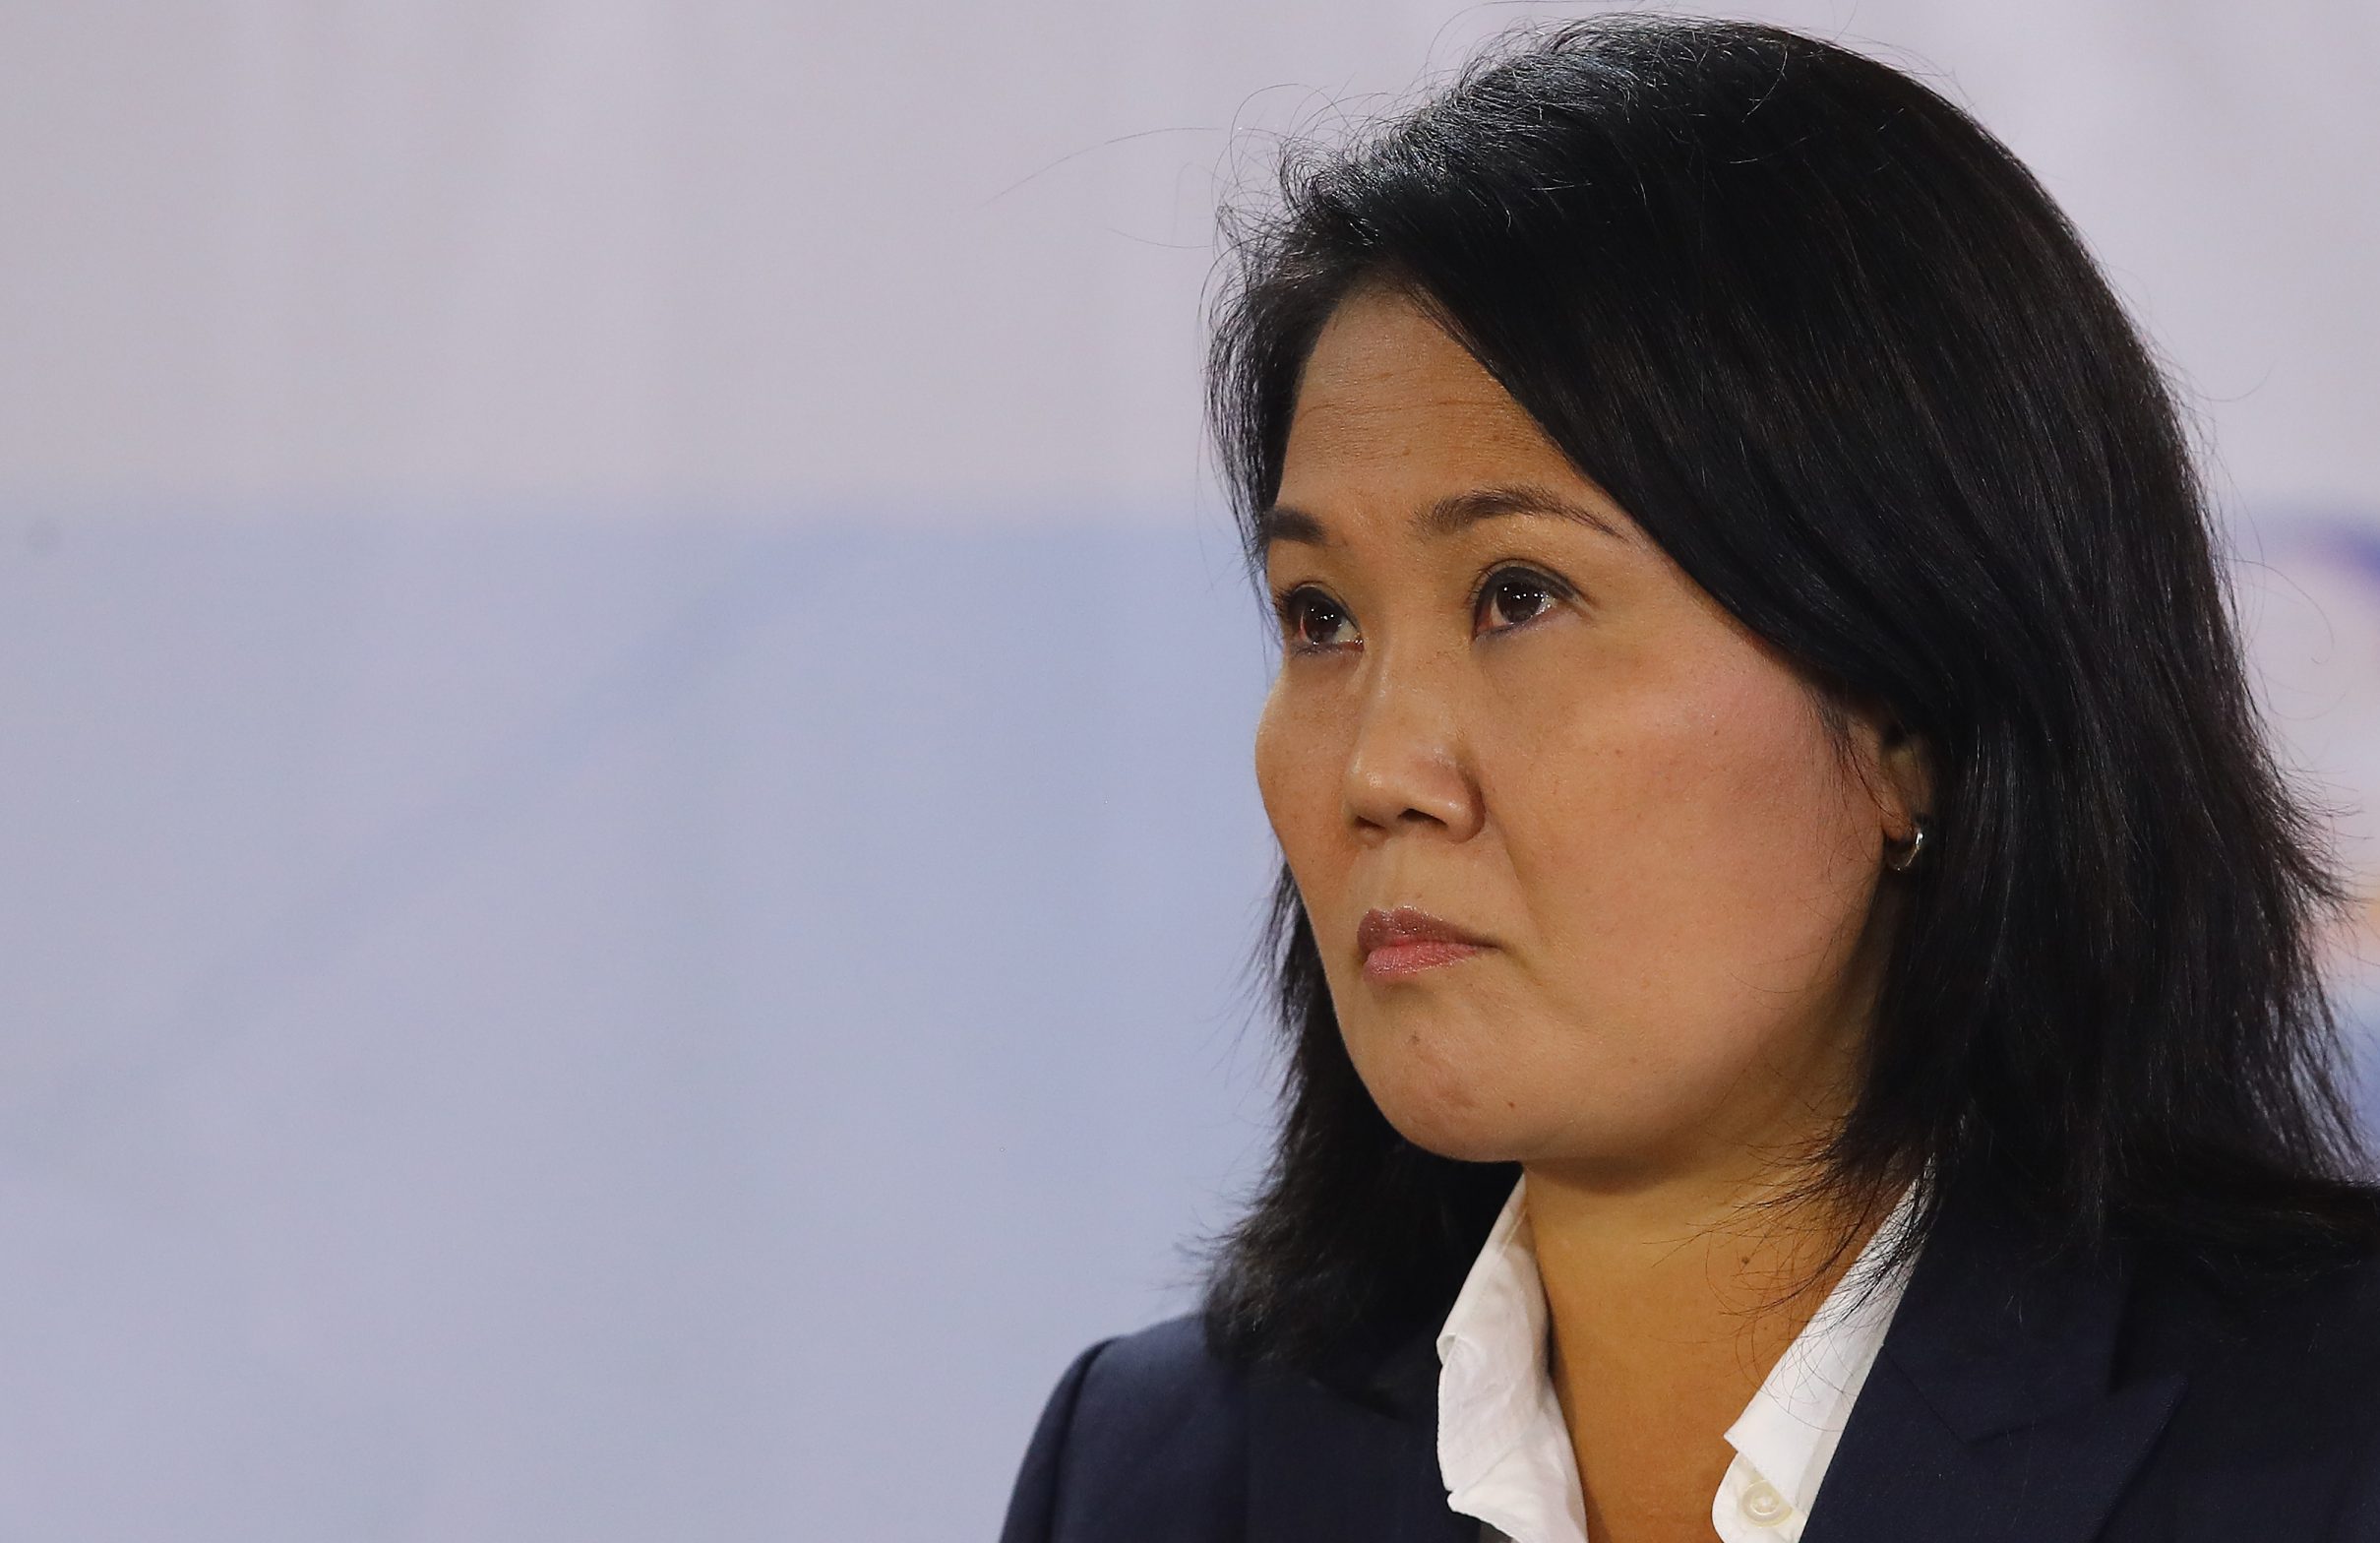 Keiko Fujimori sobre salud de su padre: “Solo ha sido un susto”